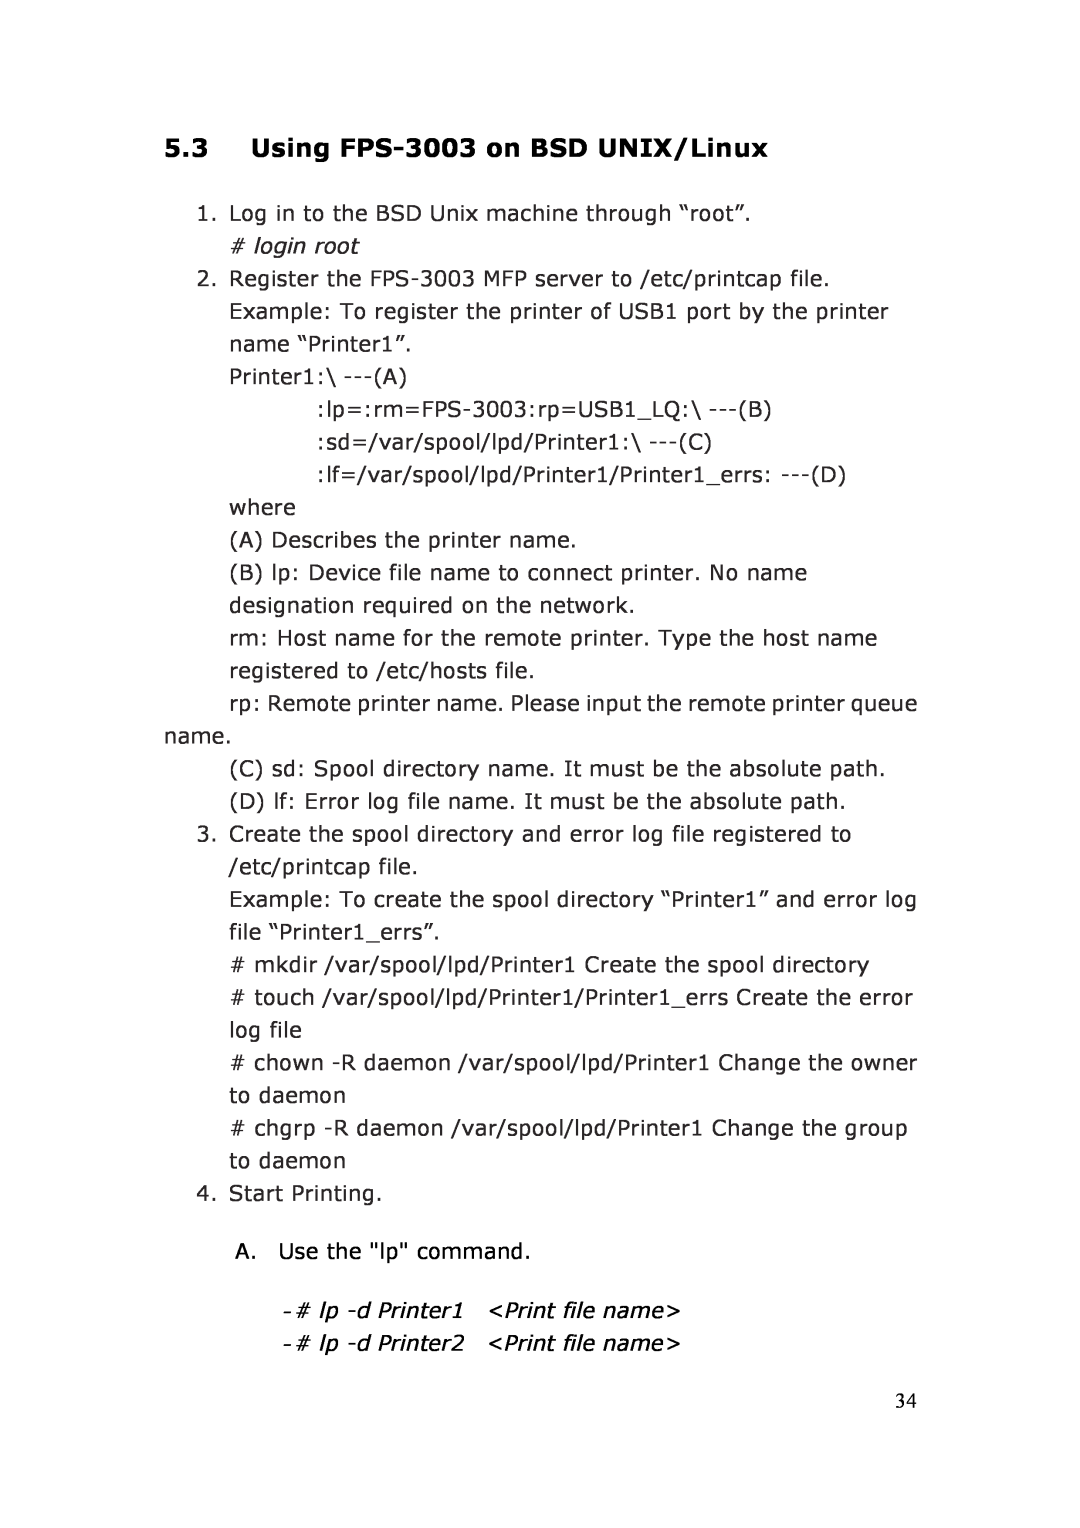 LevelOne user manual Using FPS-3003 on BSD UNIX/Linux, # lp -d Printer1 Print file name # lp -d Printer2 Print file name 